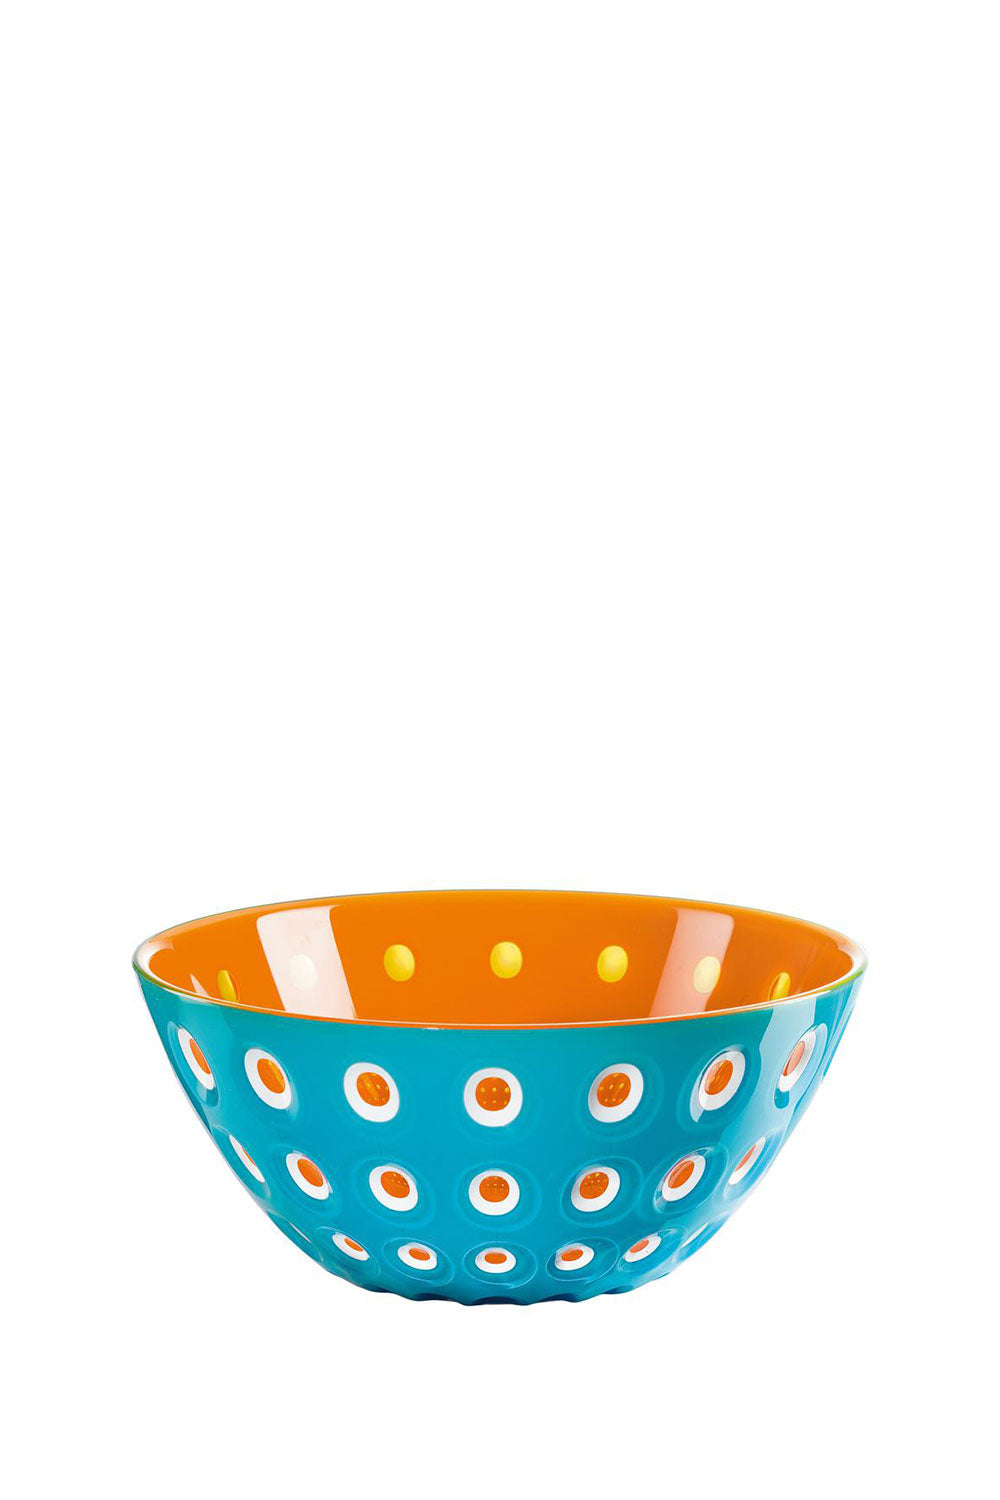 Murrine Blue & Orange Bowl, 20 cm - Maison7